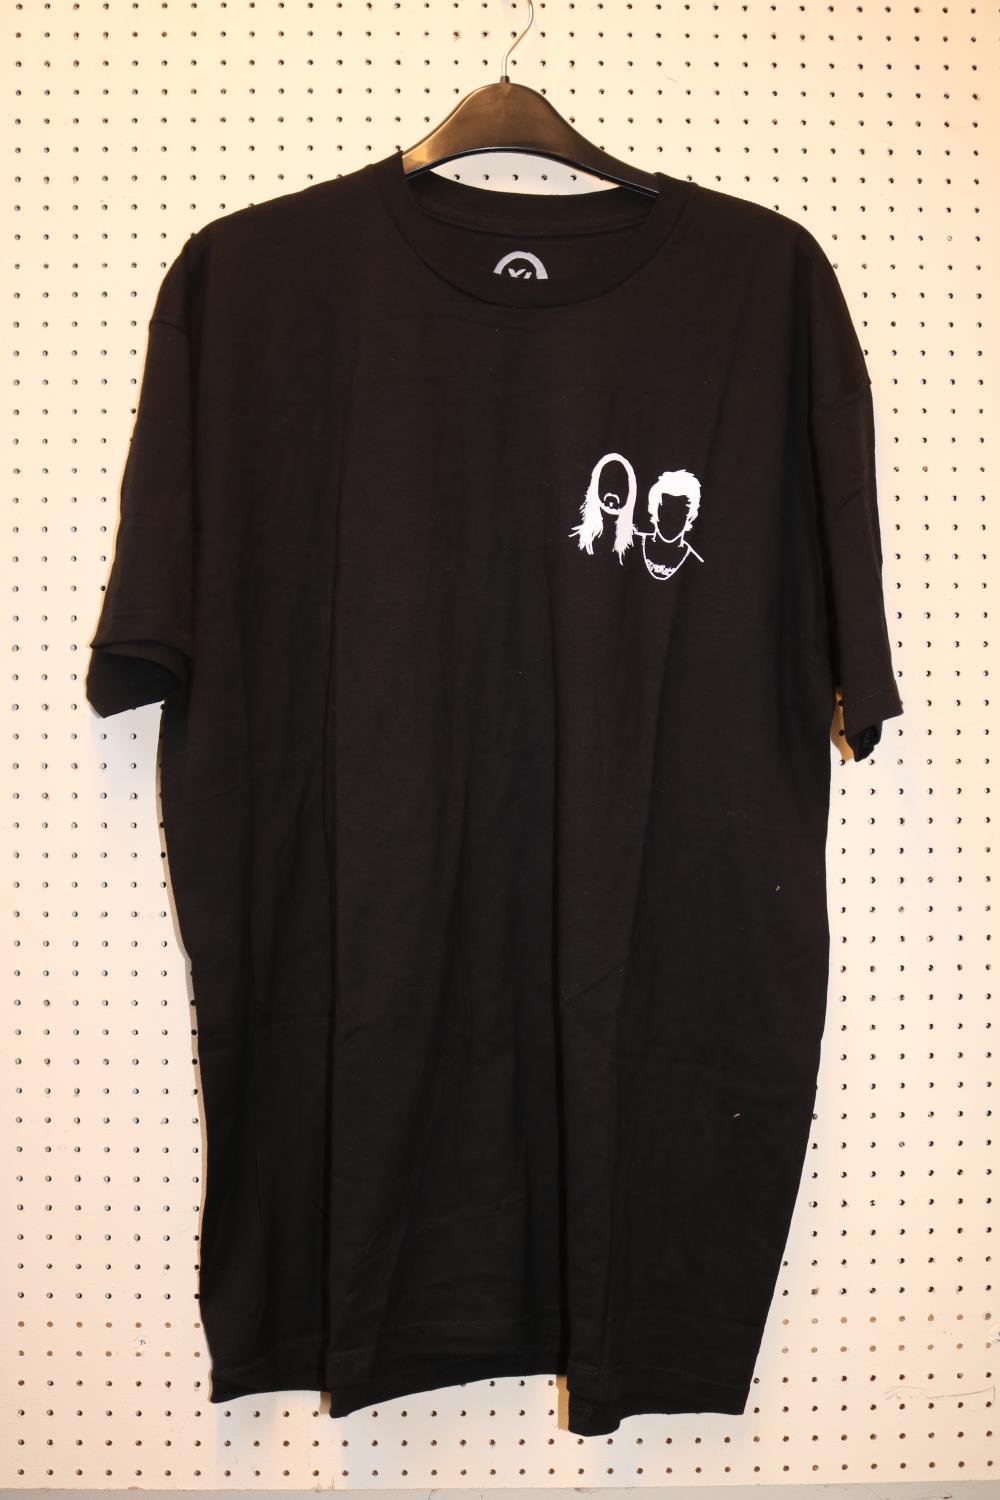 Steve Aoki Back pack, Dim Mak XL Steve Aoki & Will SParks T-Shirt, Just Hold On T-Shirt, Steve - Image 3 of 9